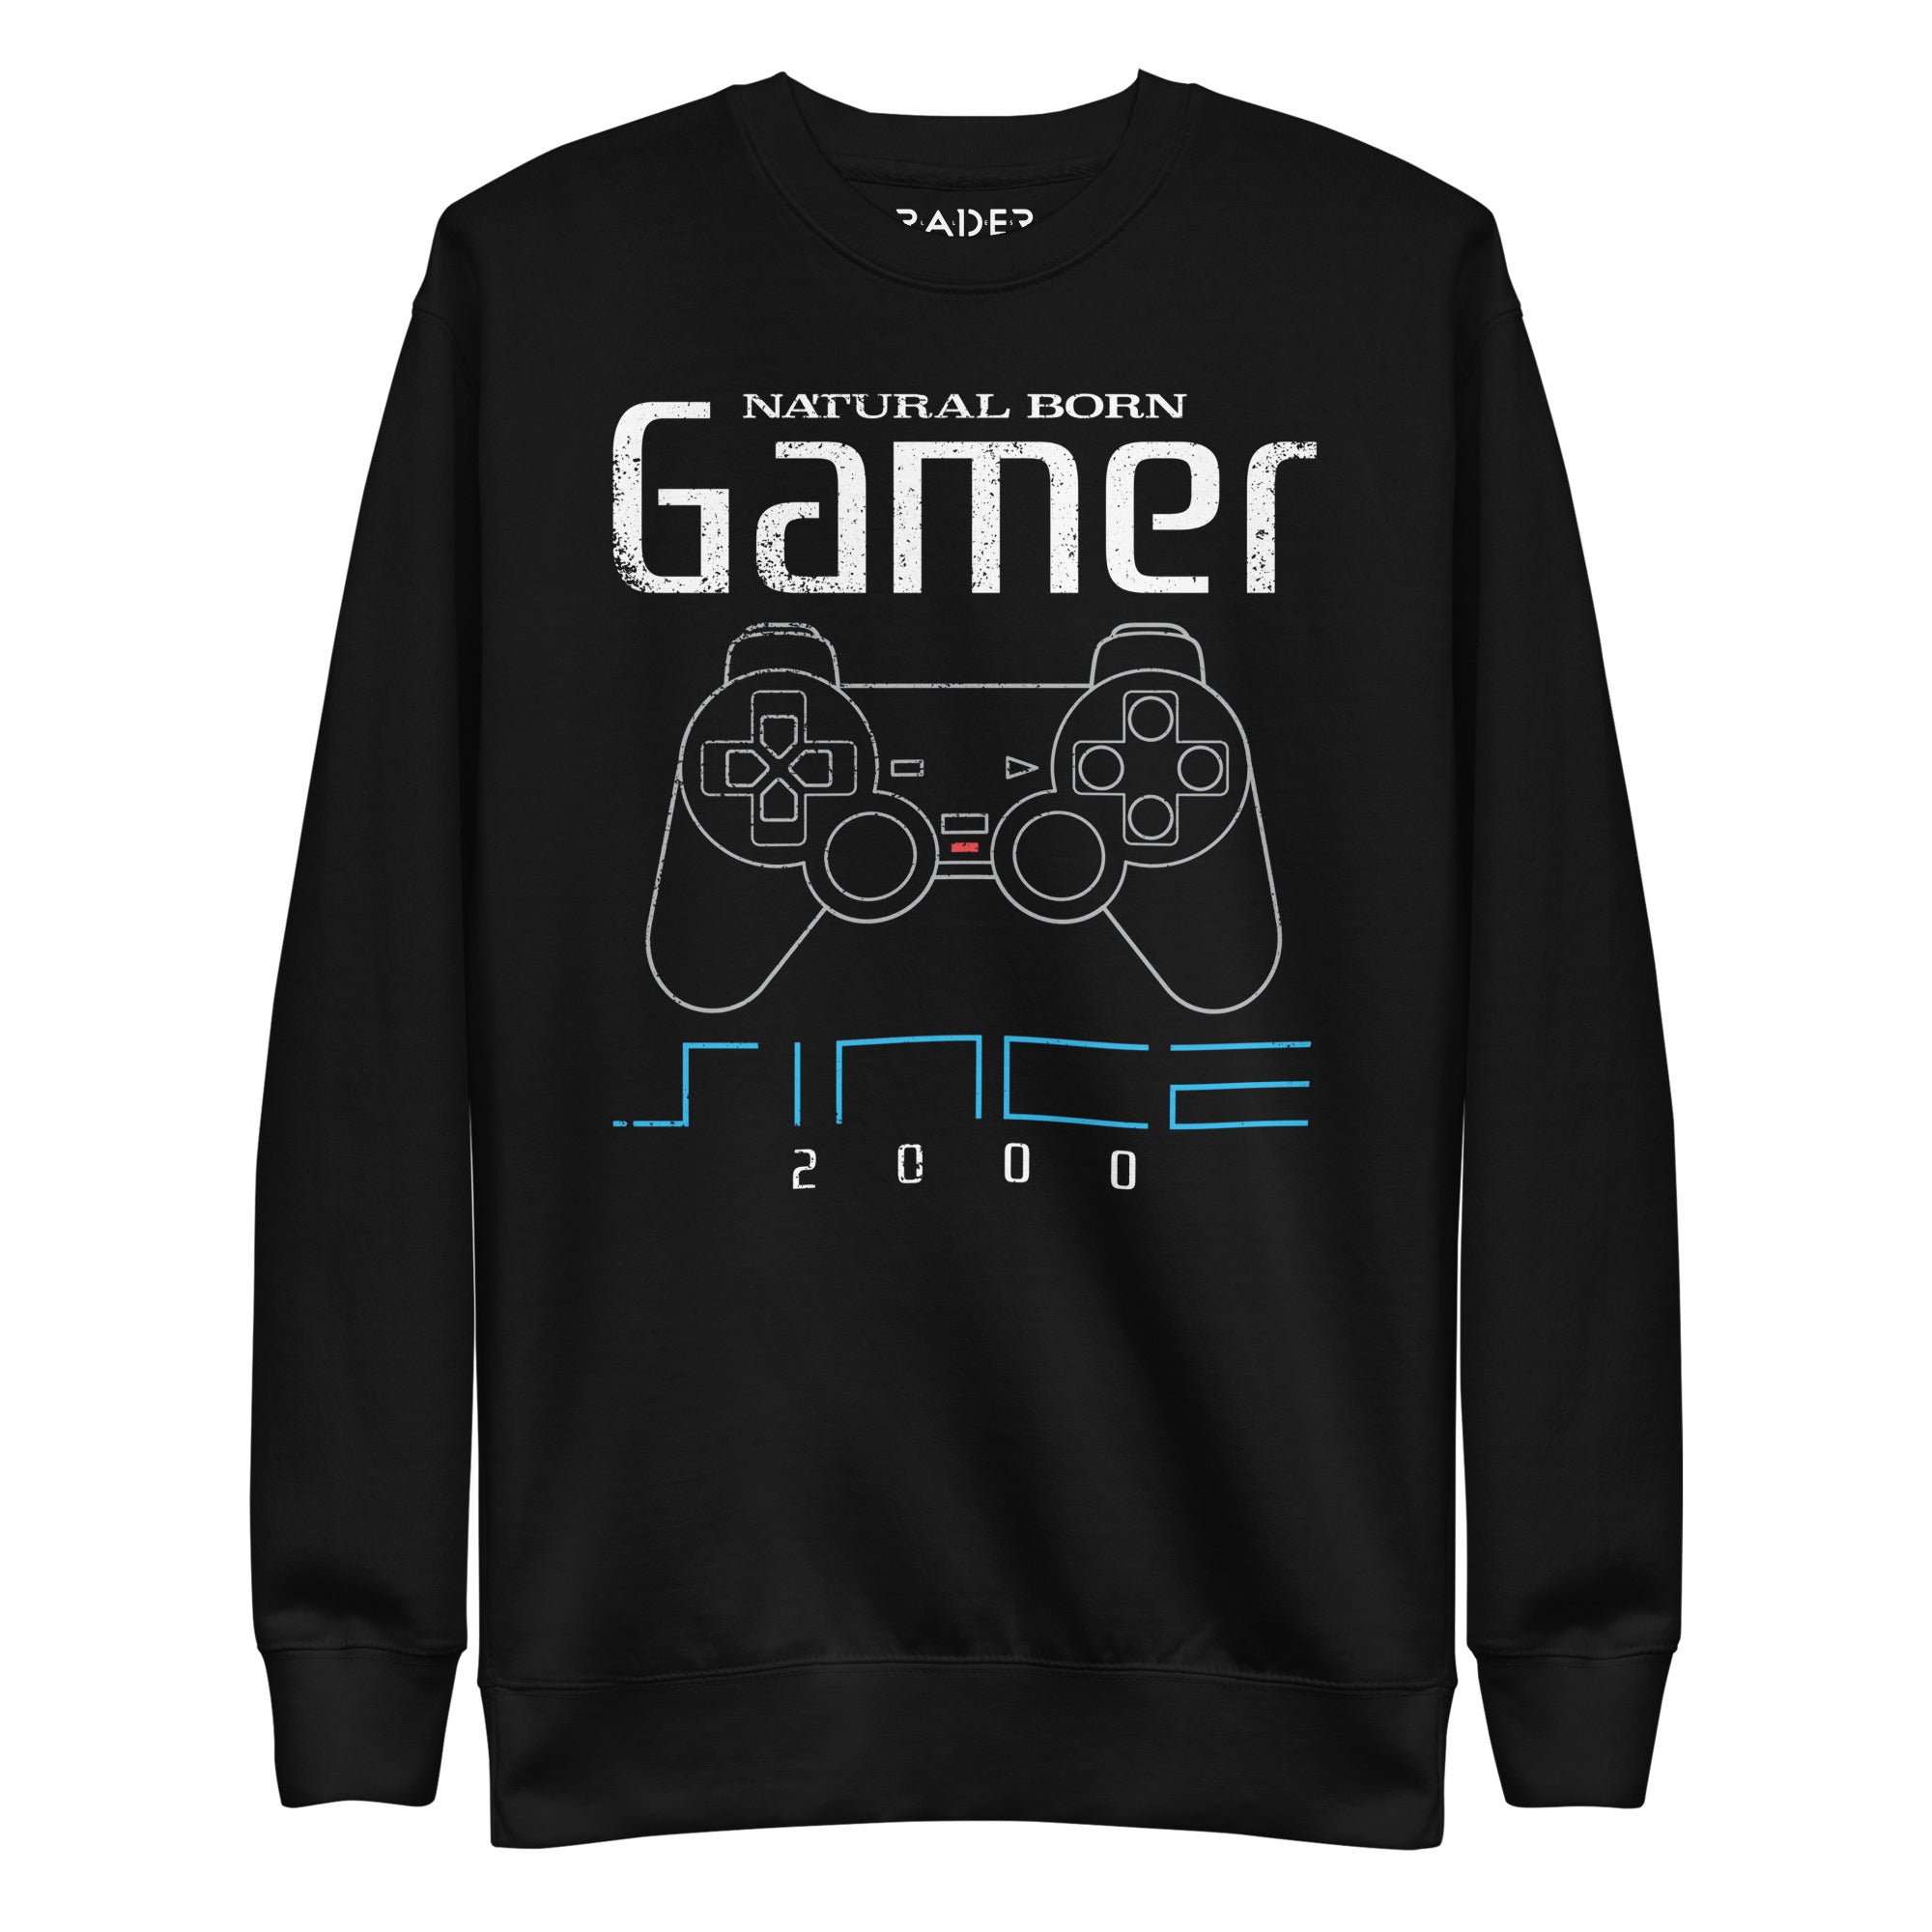 Natural Born Gamer Since 2000 Sweatshirt